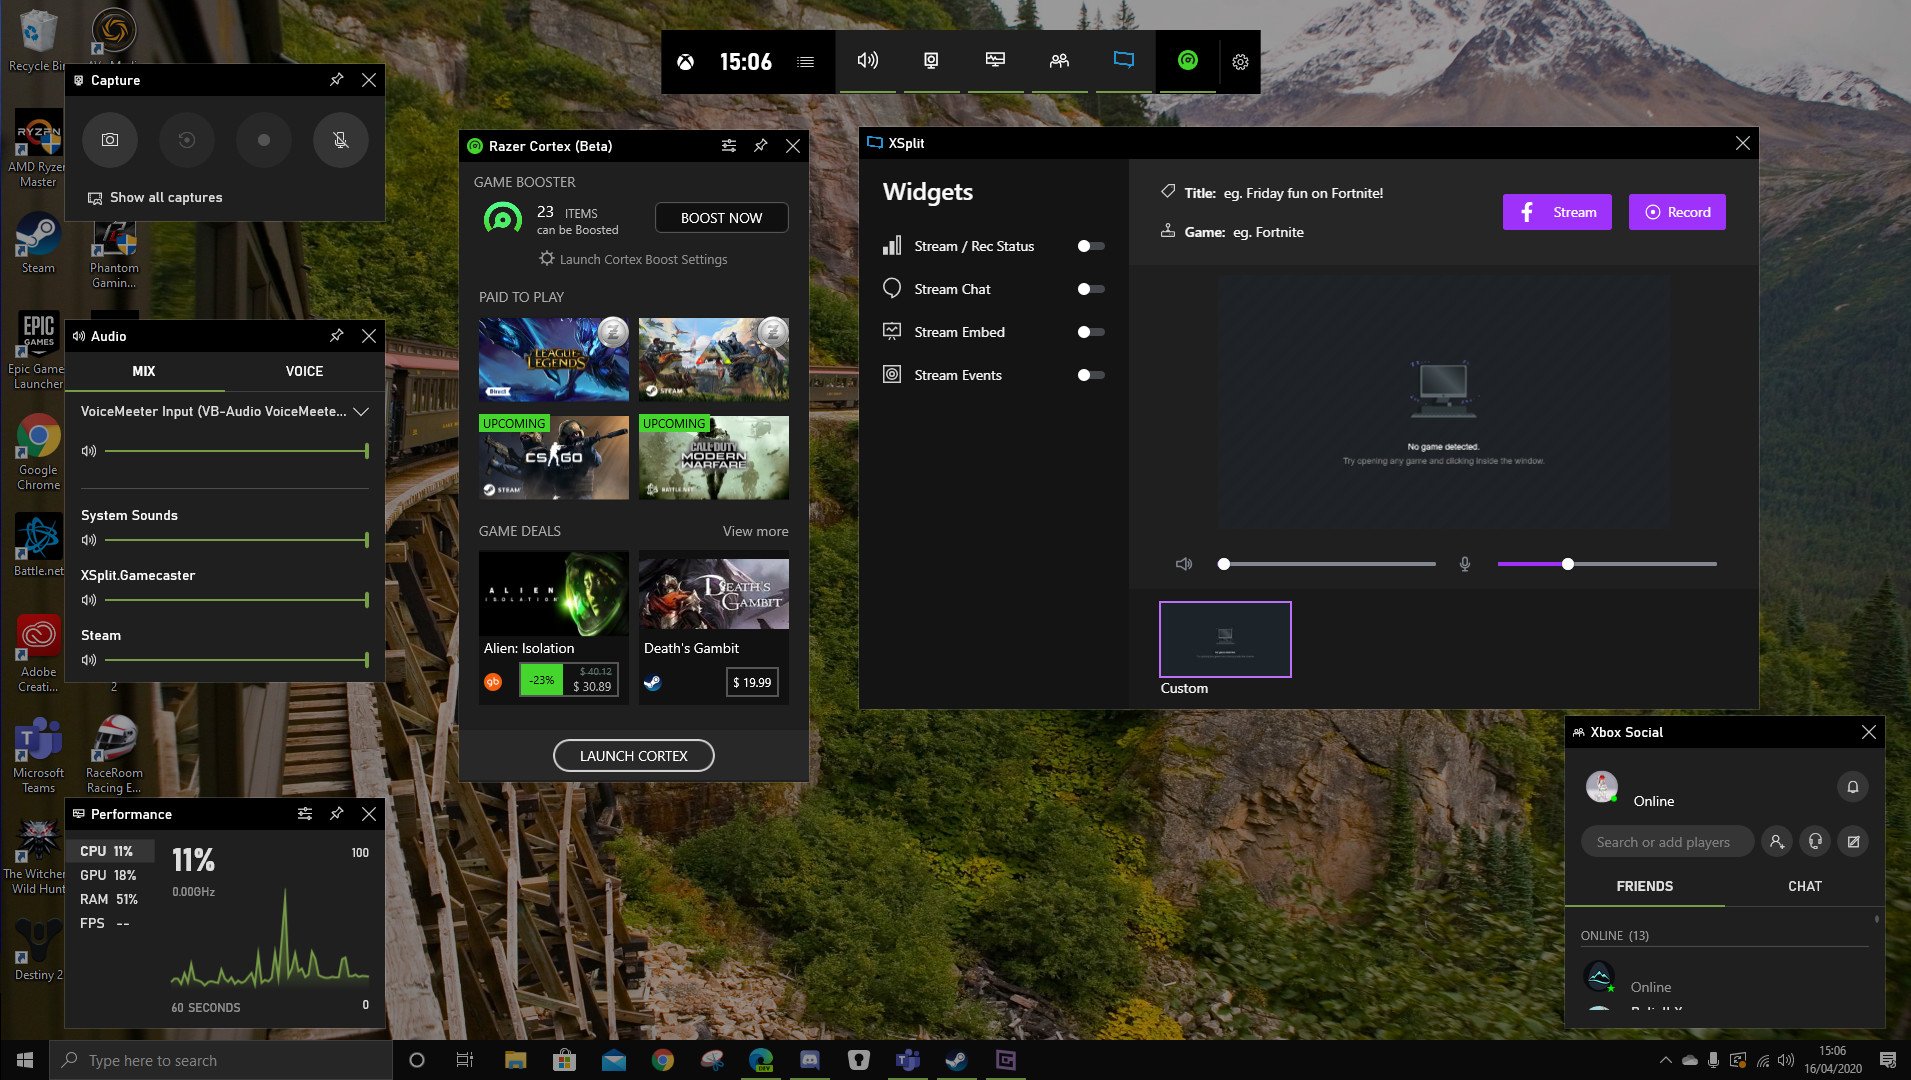 Microsoft's Xbox Game Bar is getting custom widgets and its own